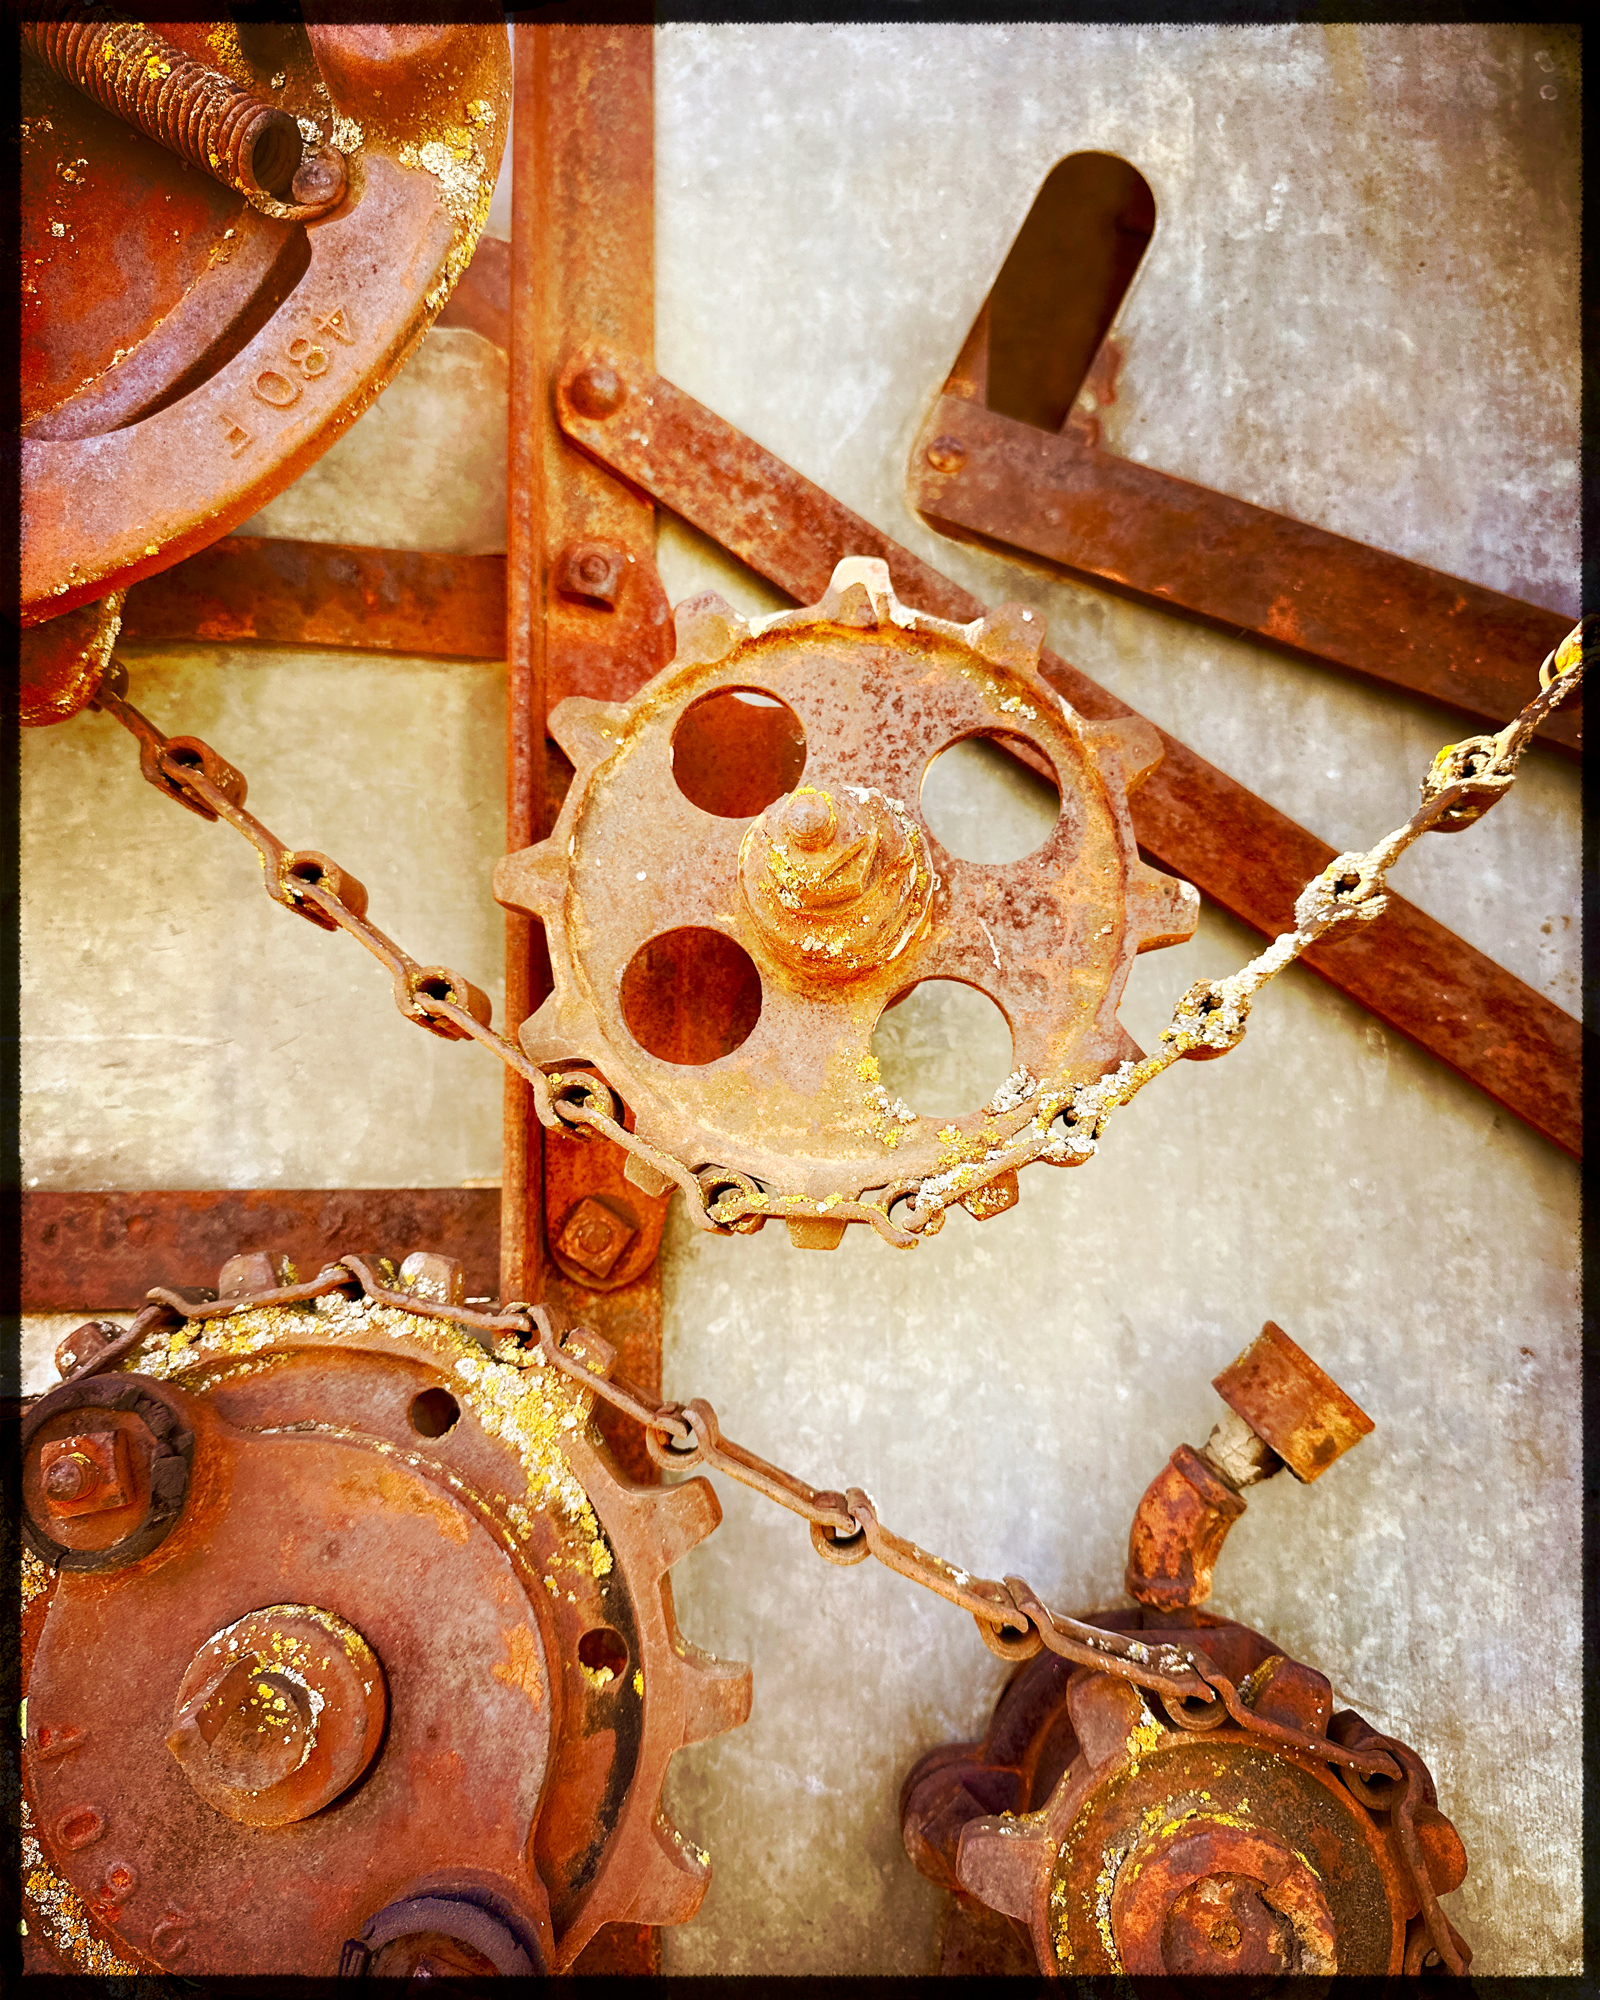 Rusty gears, one of my favorites, rust